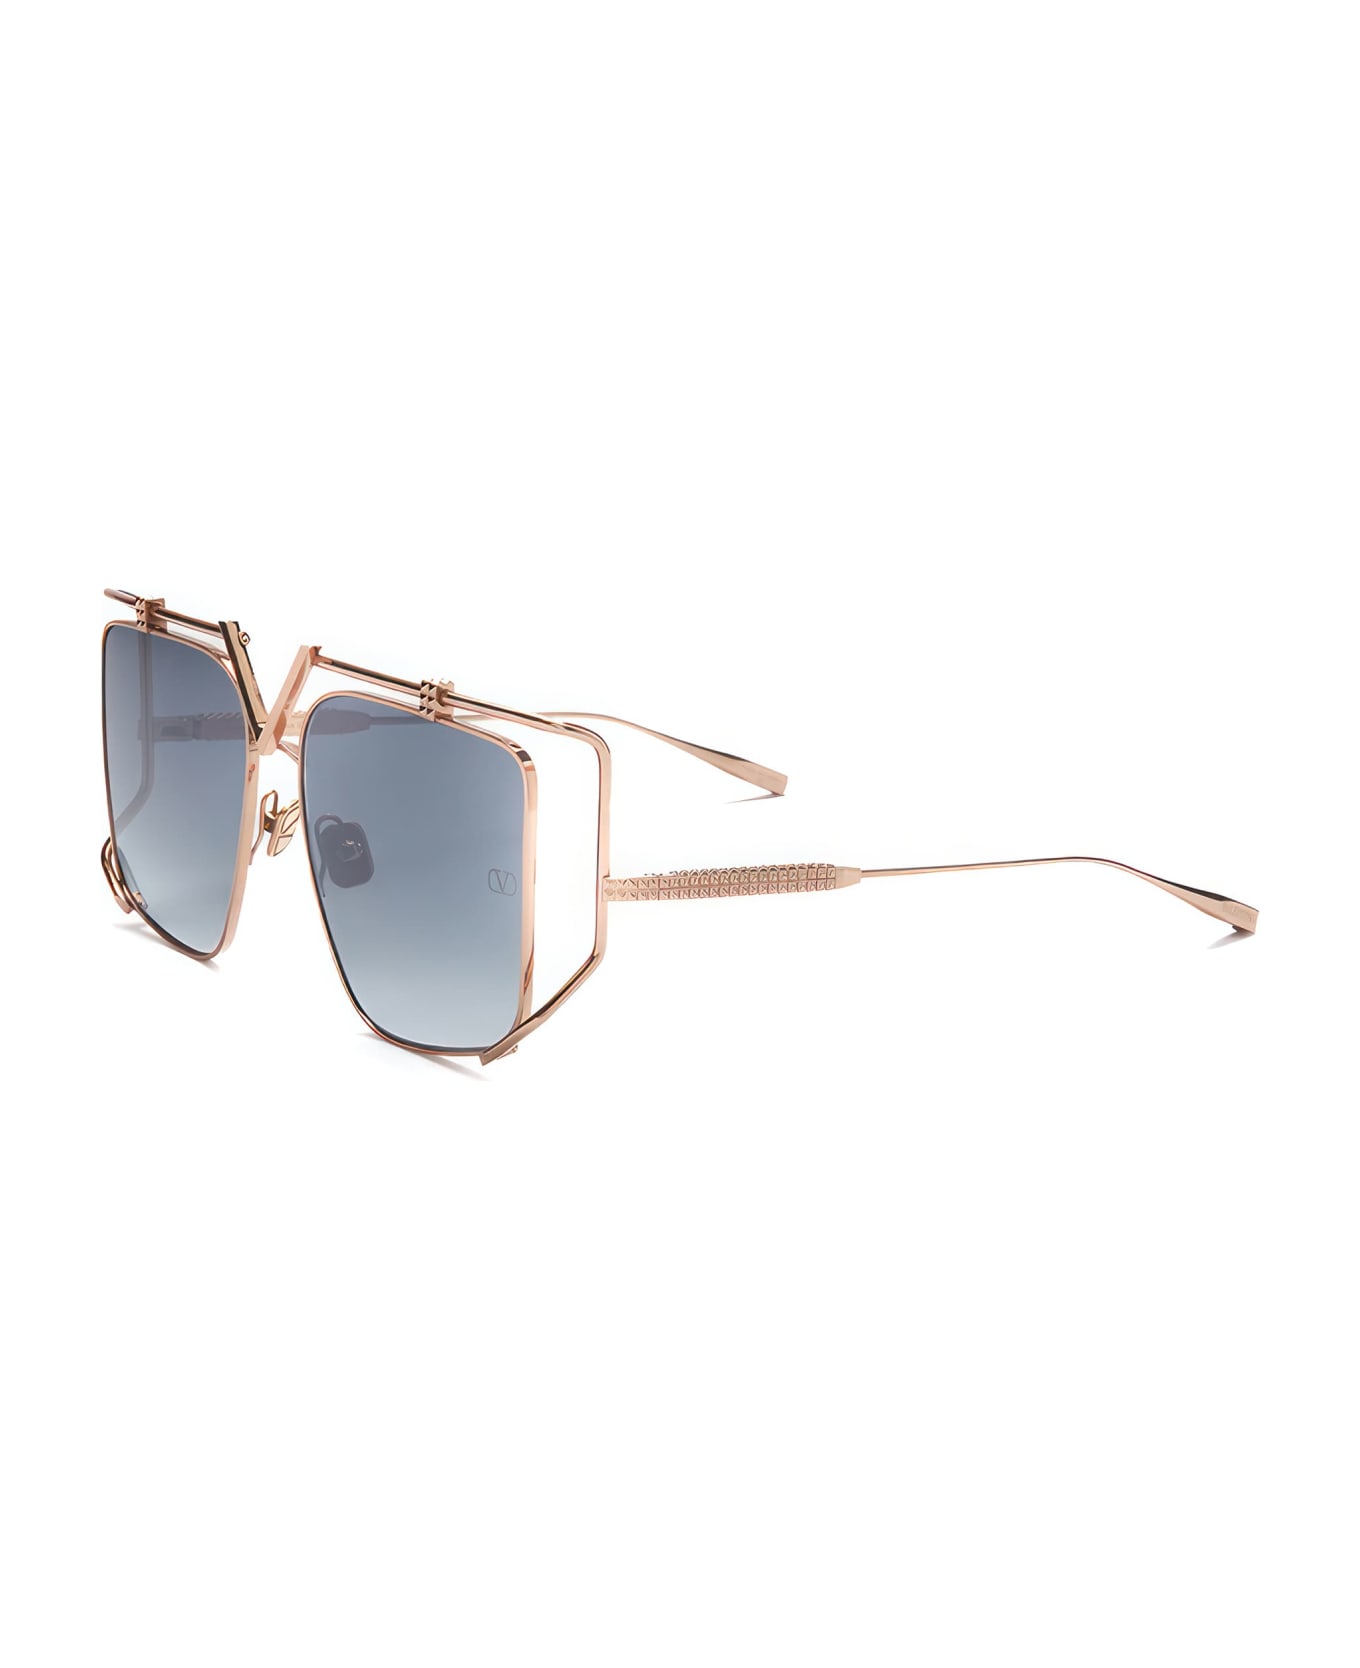 Valentino Eyewear V-light - Rose Gold Sunglasses - rose gold サングラス